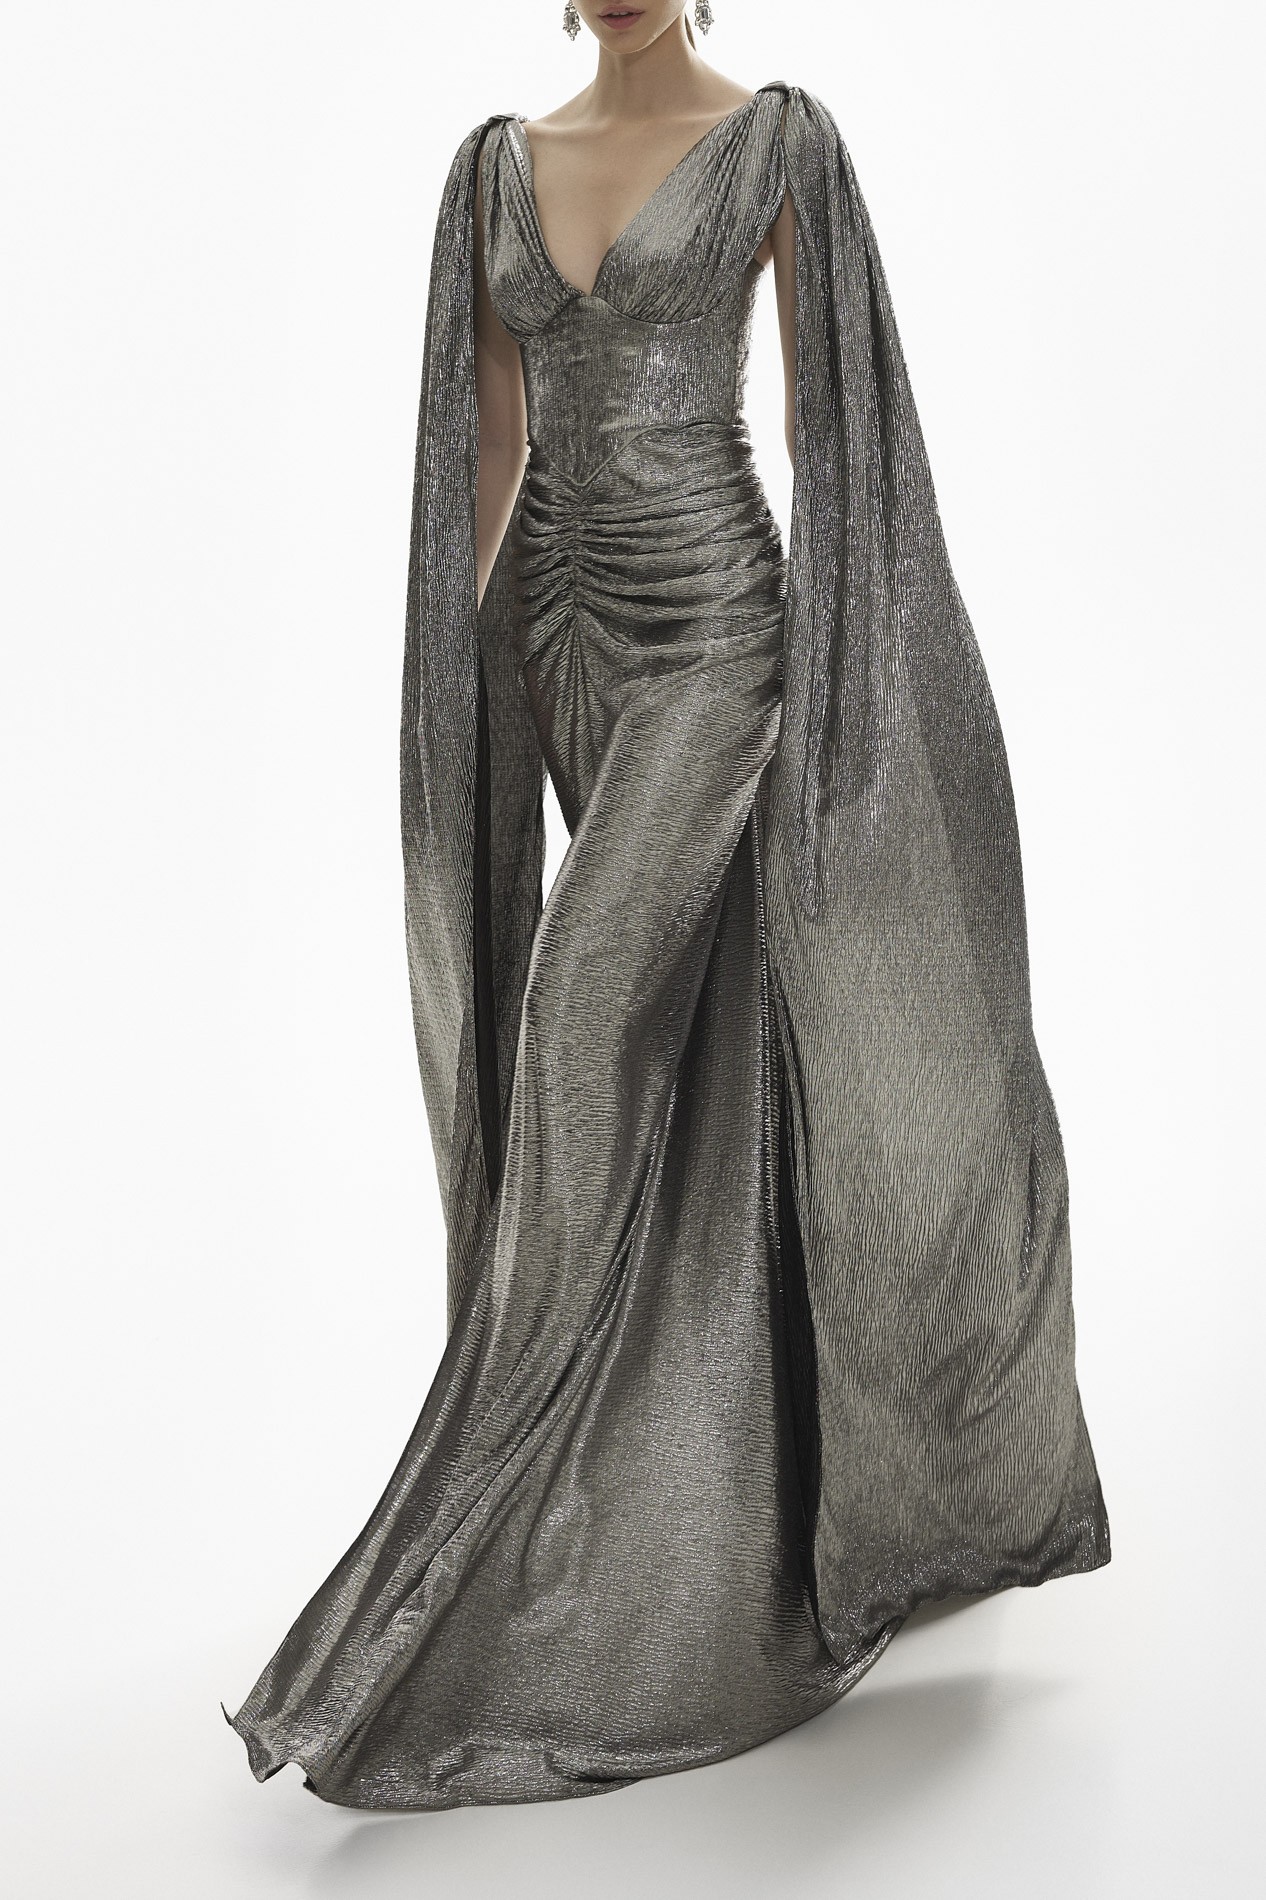 Rhea Costa Sari Long Platinum Metallic Light Crepe Dress With Capes 23215D-M12 Platinum